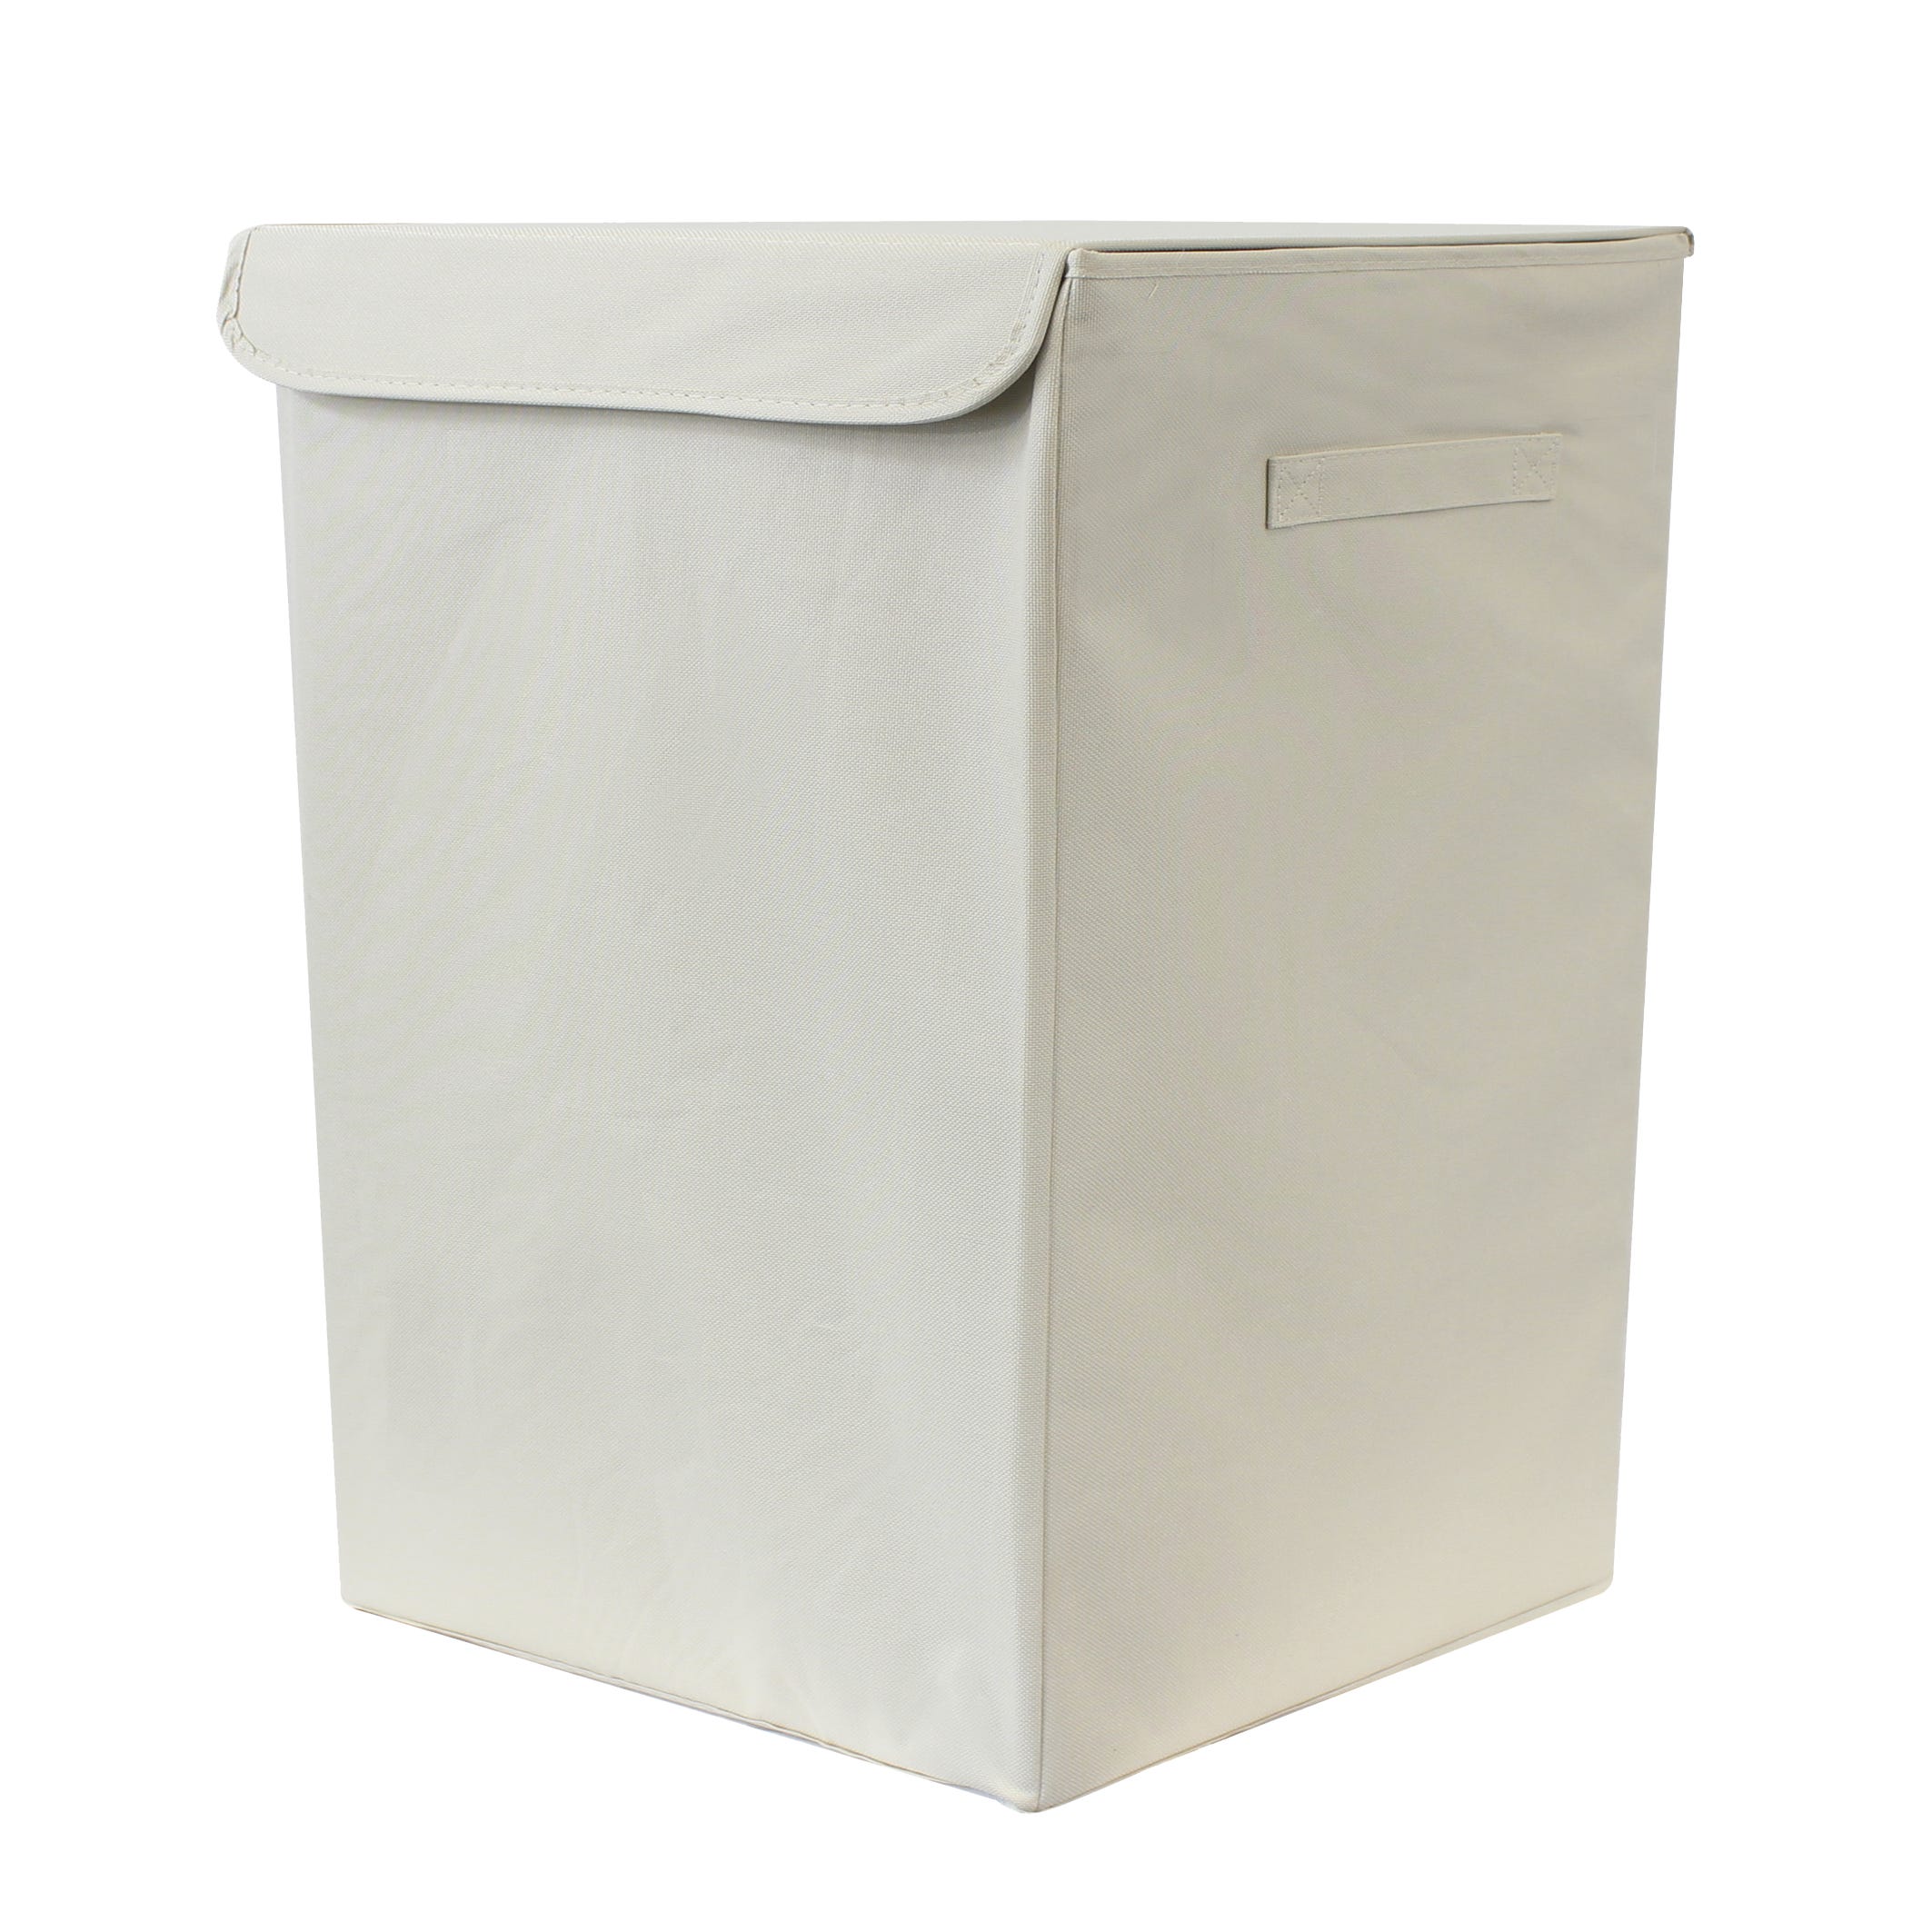 Cesto roupa suja roupeiro fibra sintetica junco branco 30x30x57 - Carrefour  - Carrefour